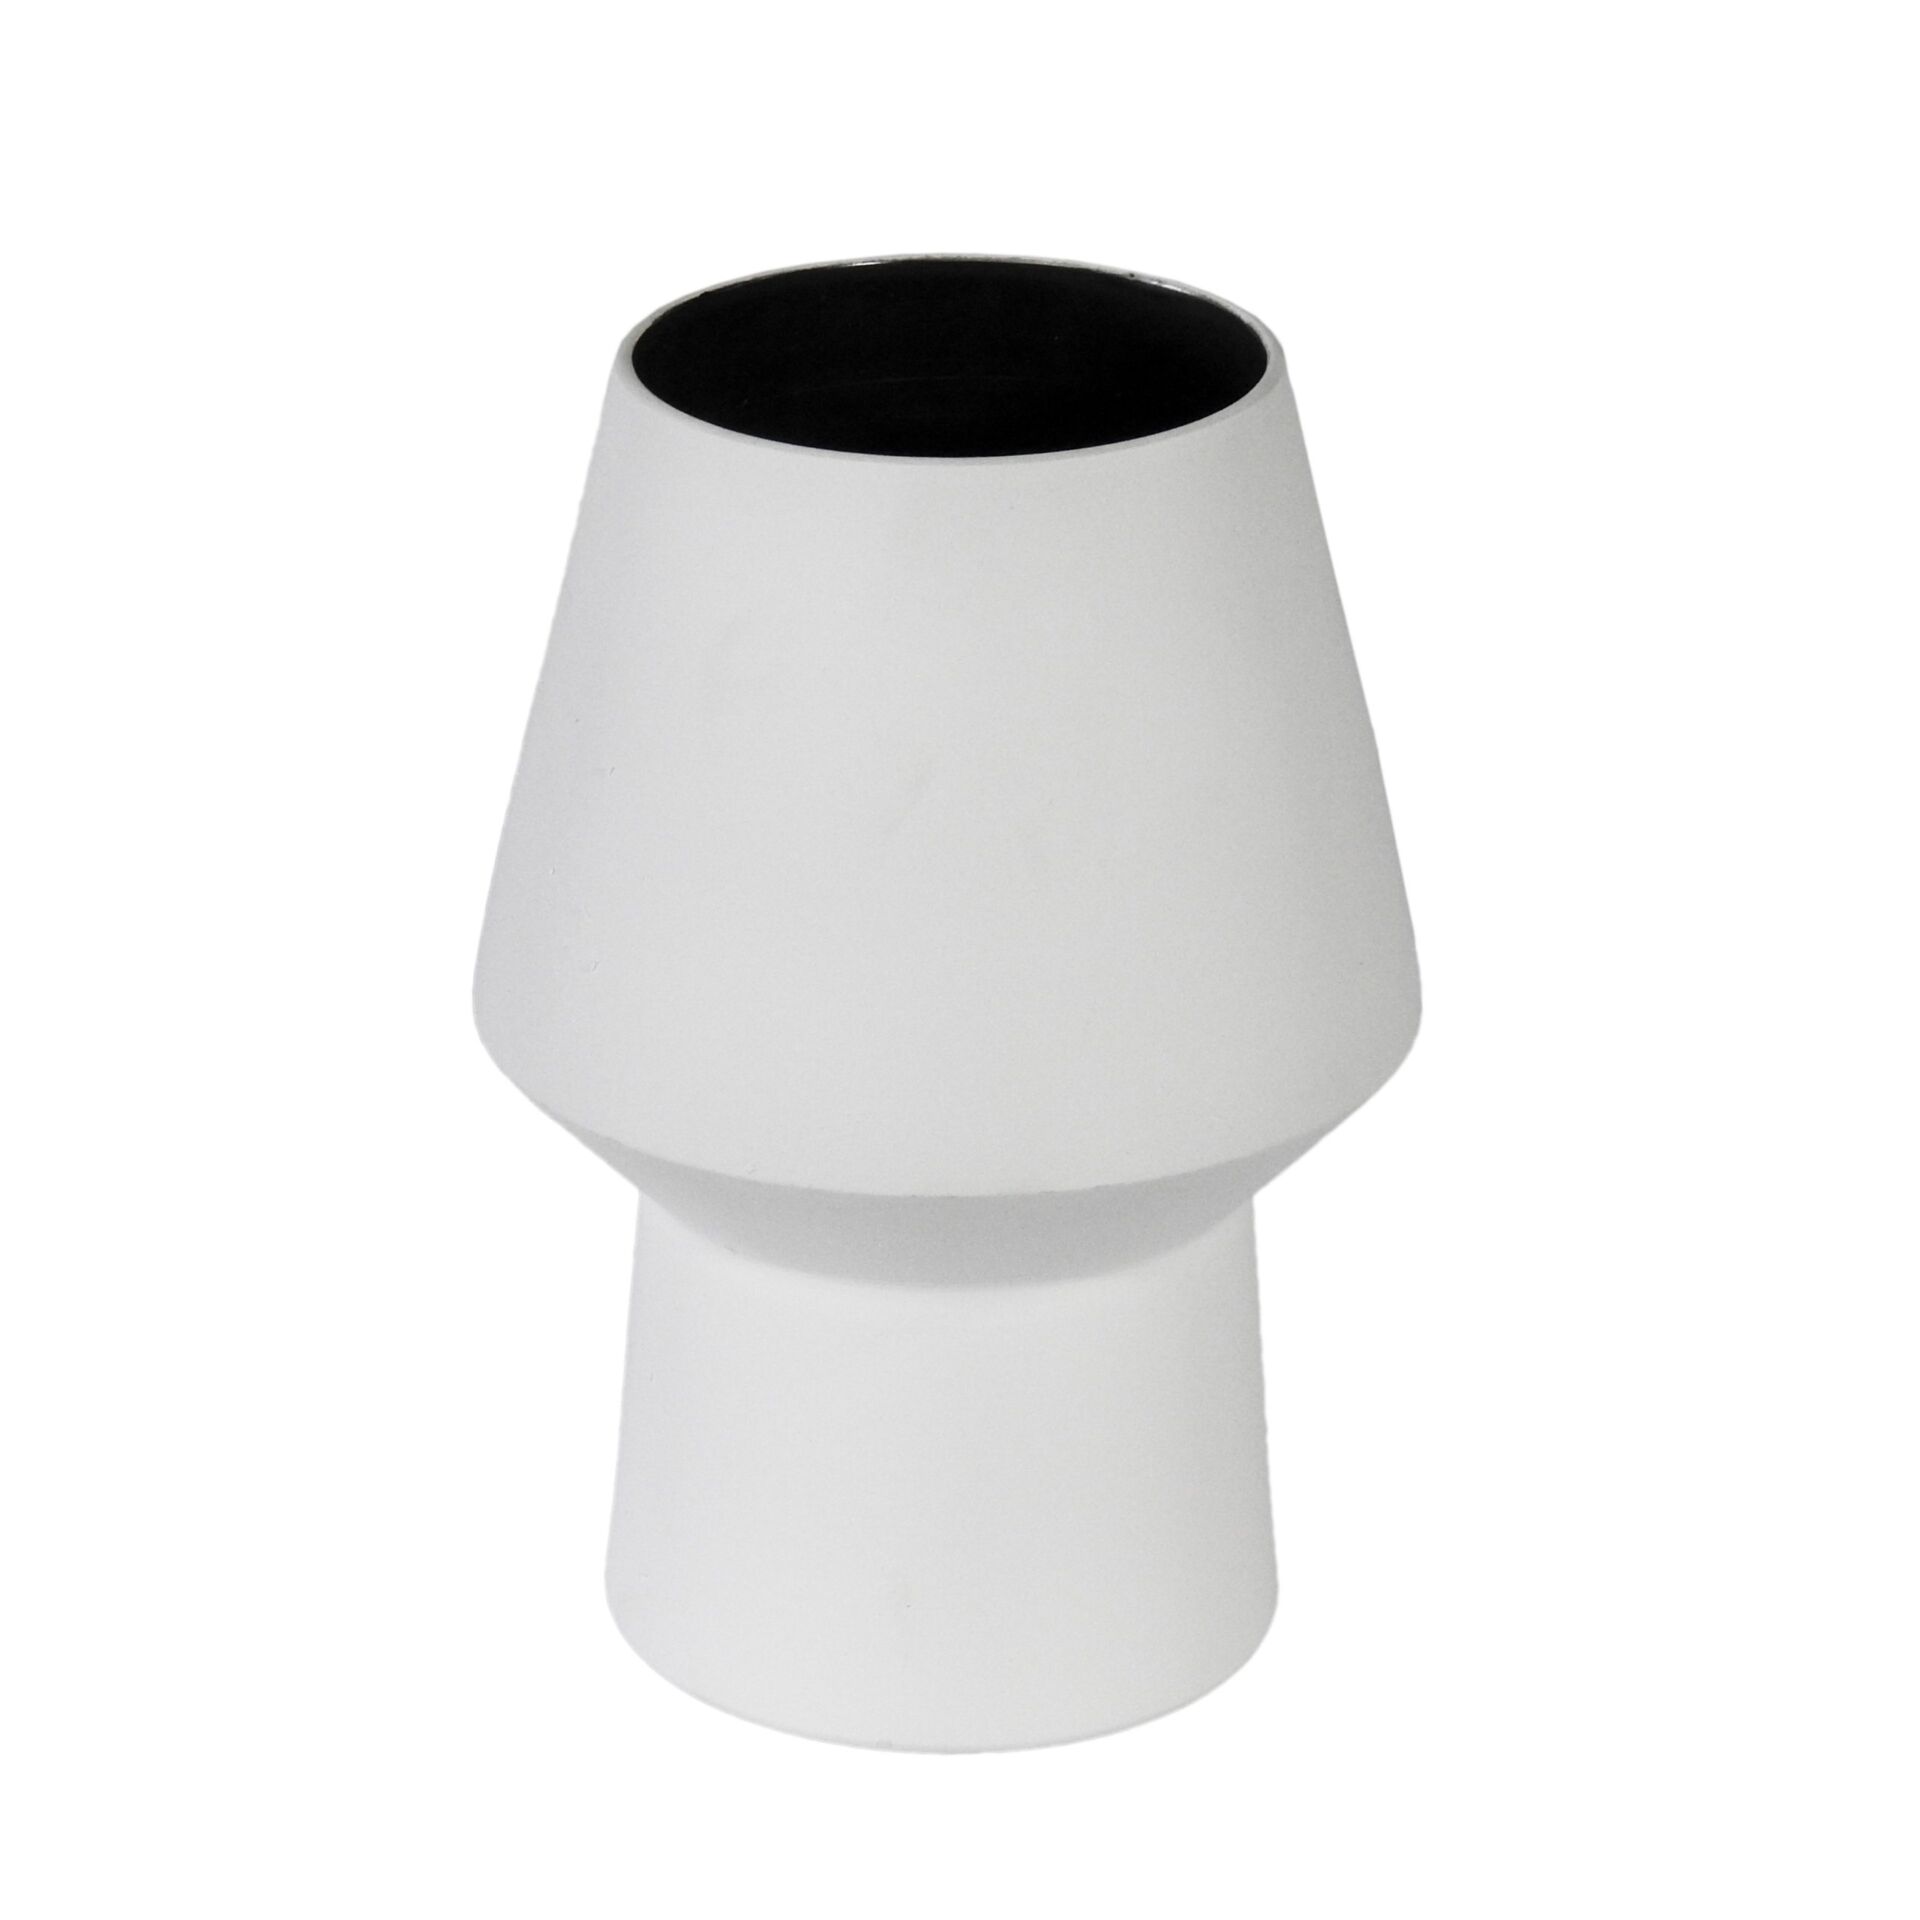 Vaso-Ceramica-Branco-Ariel-COD-9080